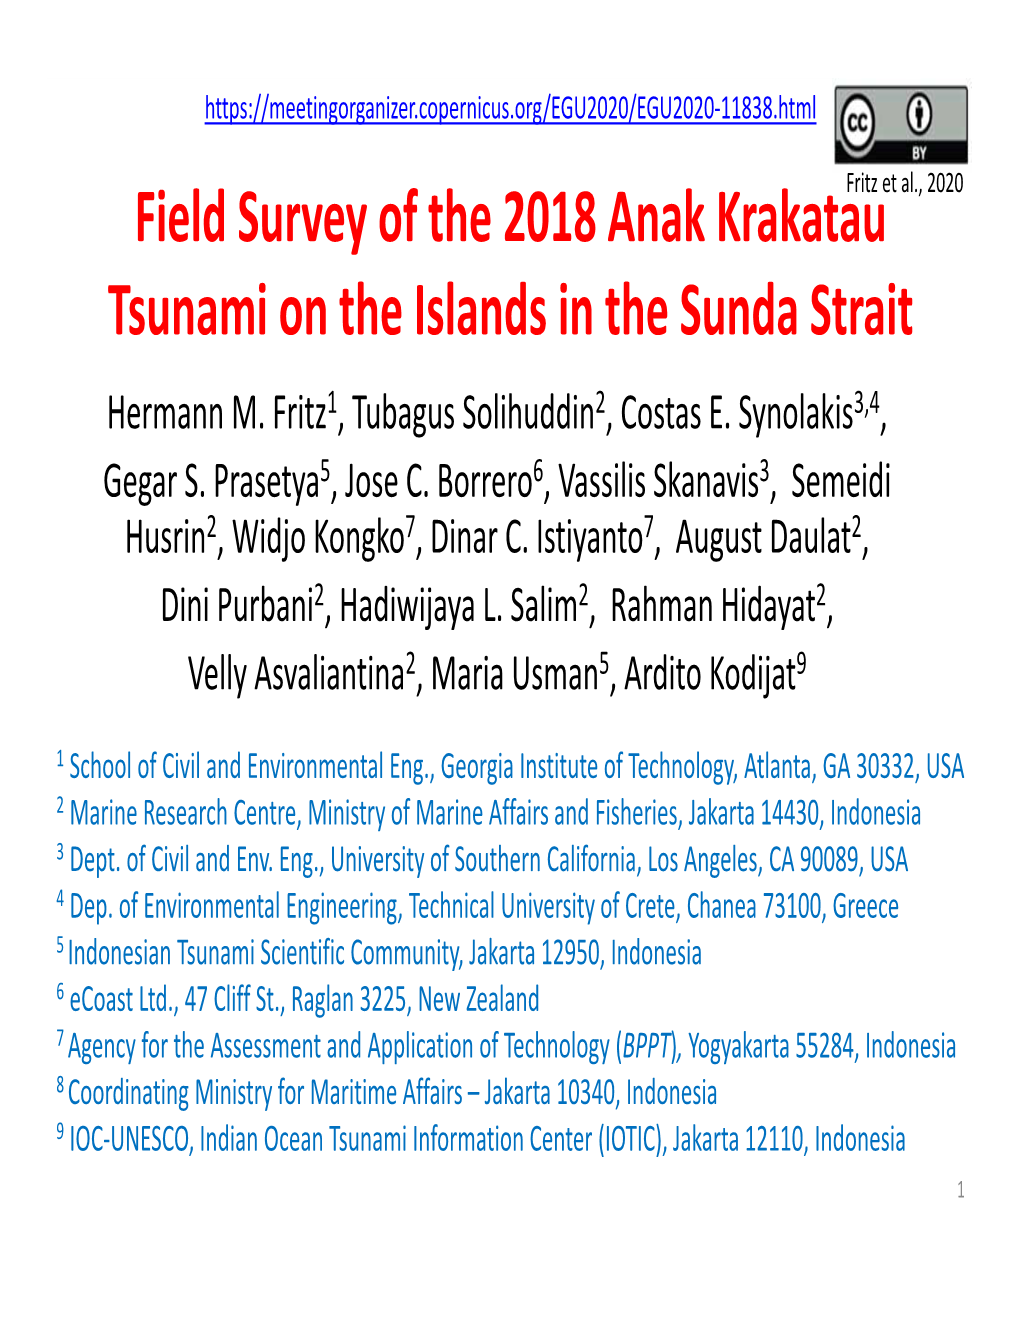 Field Survey of the 2018 Anak Krakatau Tsunami on the Islands in the Sunda Strait